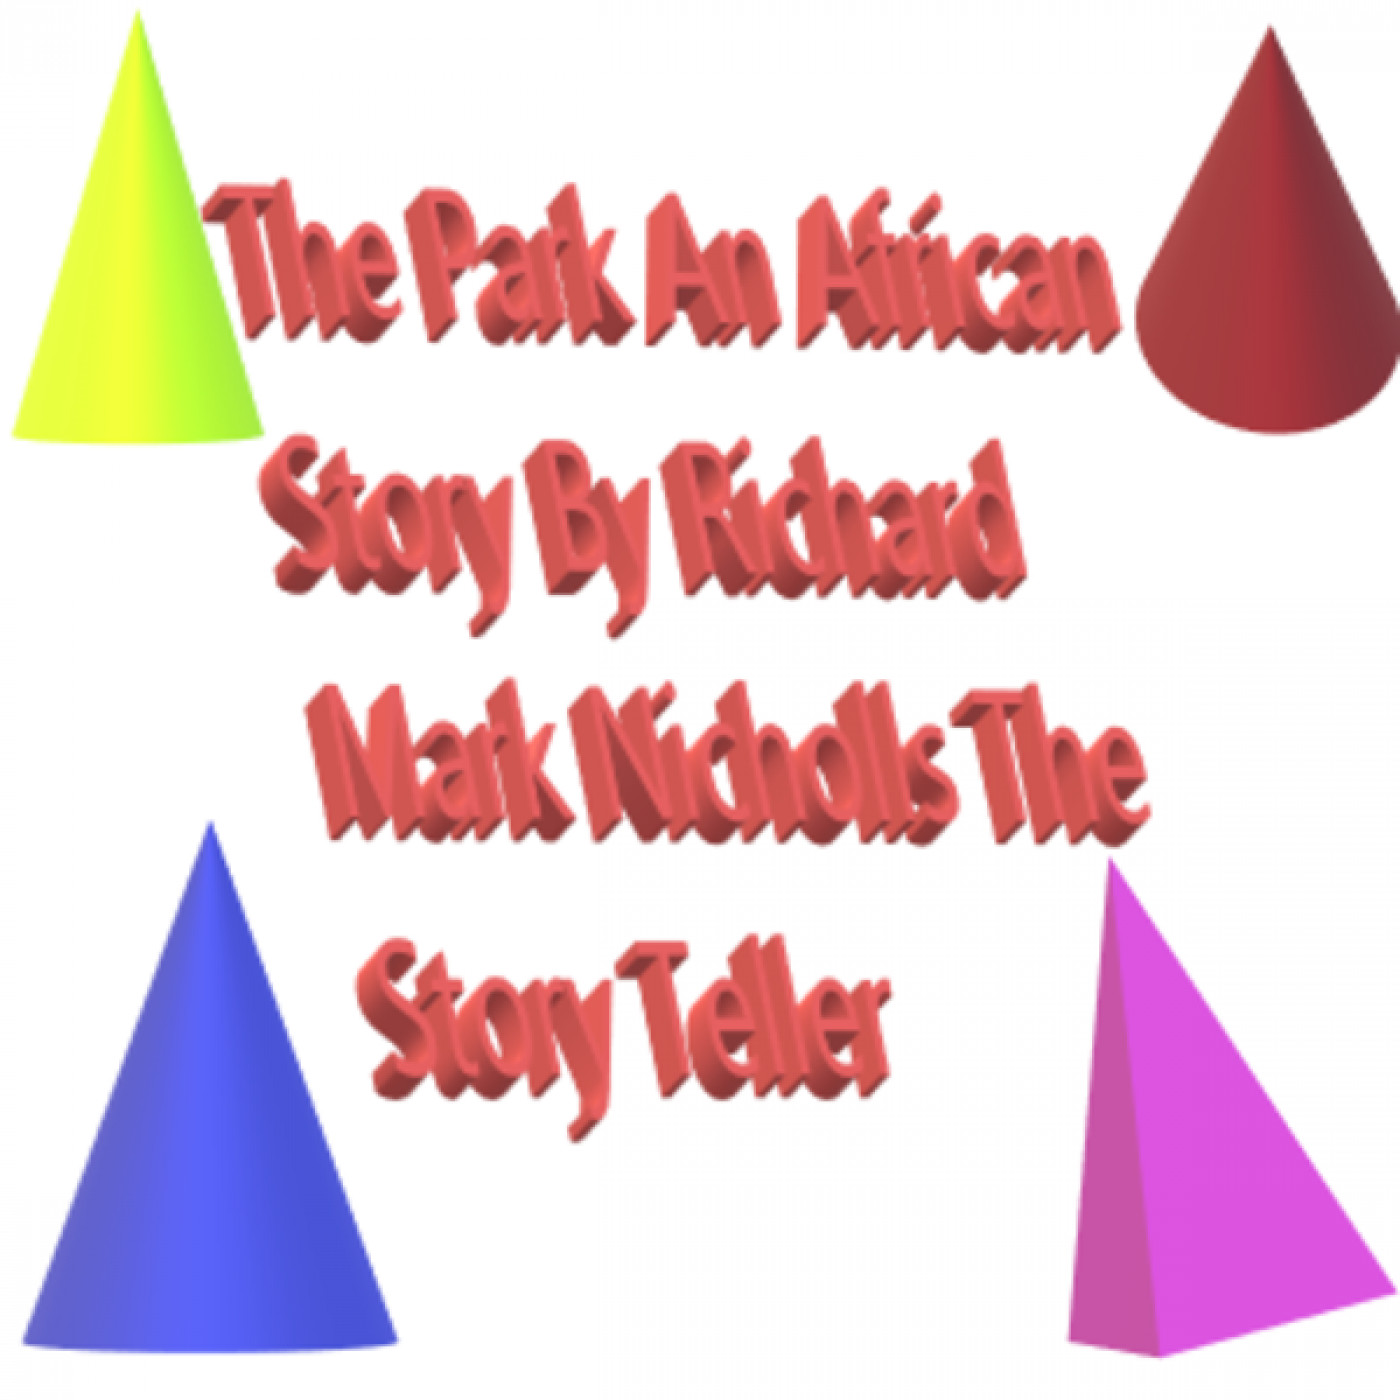 THE PARK AN AFRICAN STORY BY RICHARD MARK NICHOLLS The Storyteller